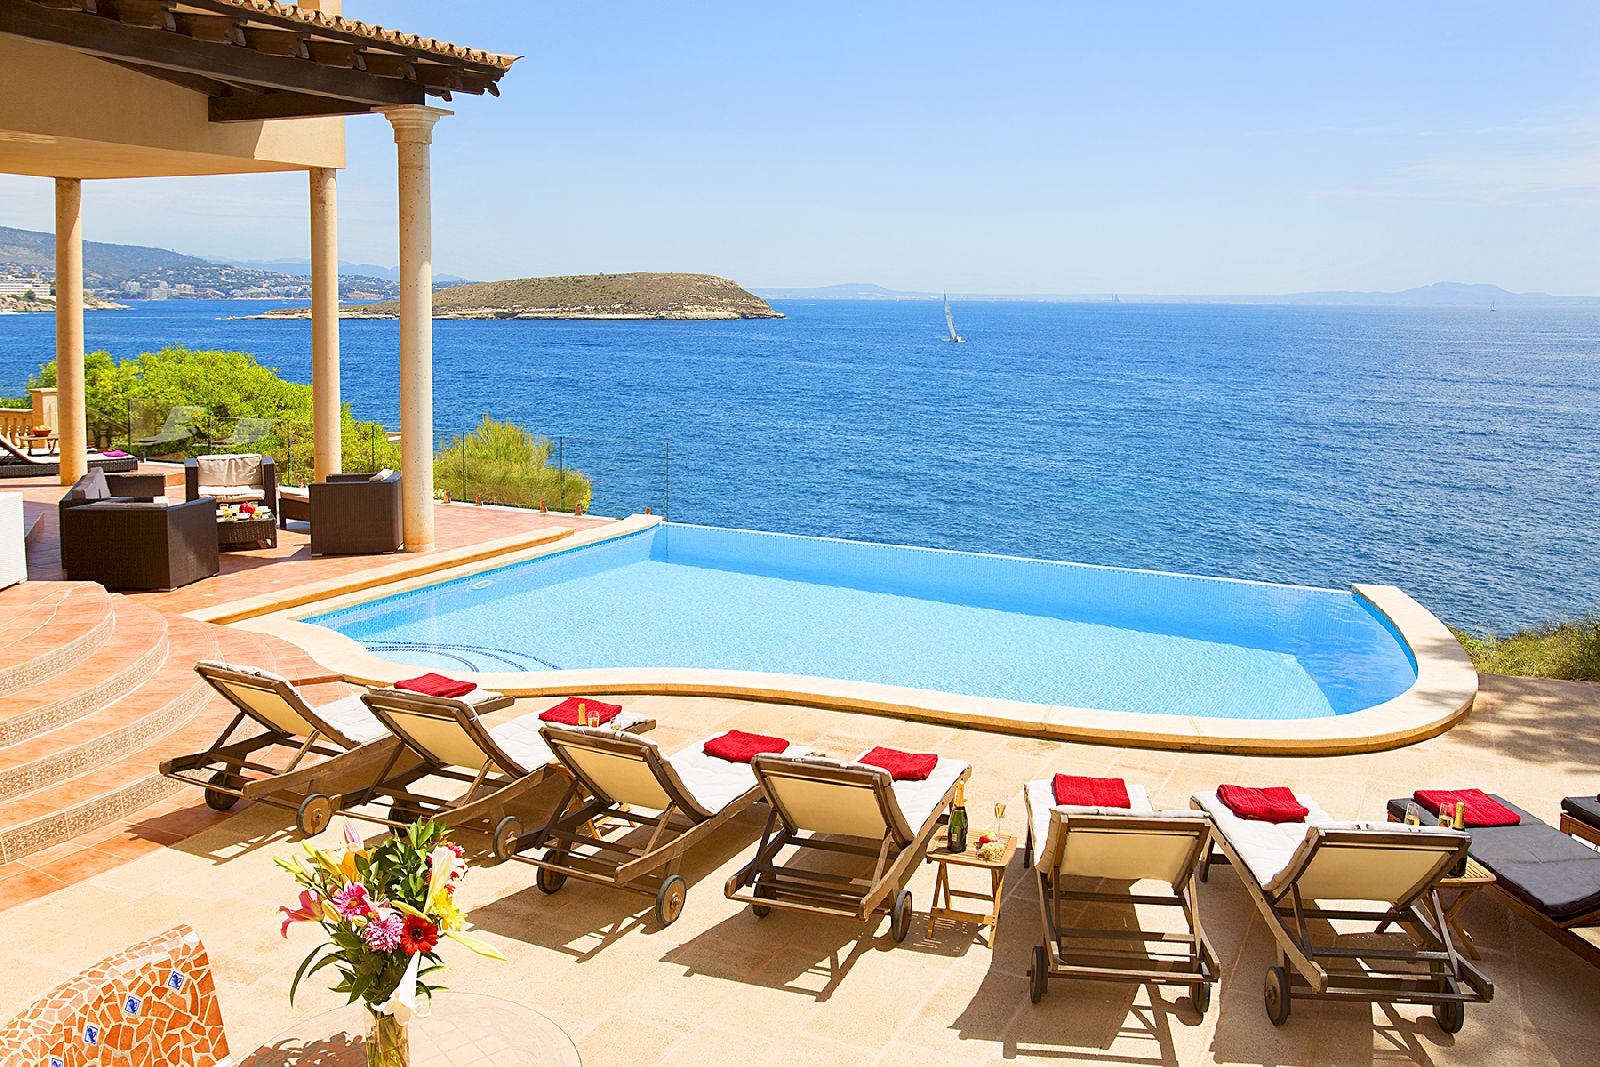 Swimming pool and sea views at Villa Santuario in Mallorca